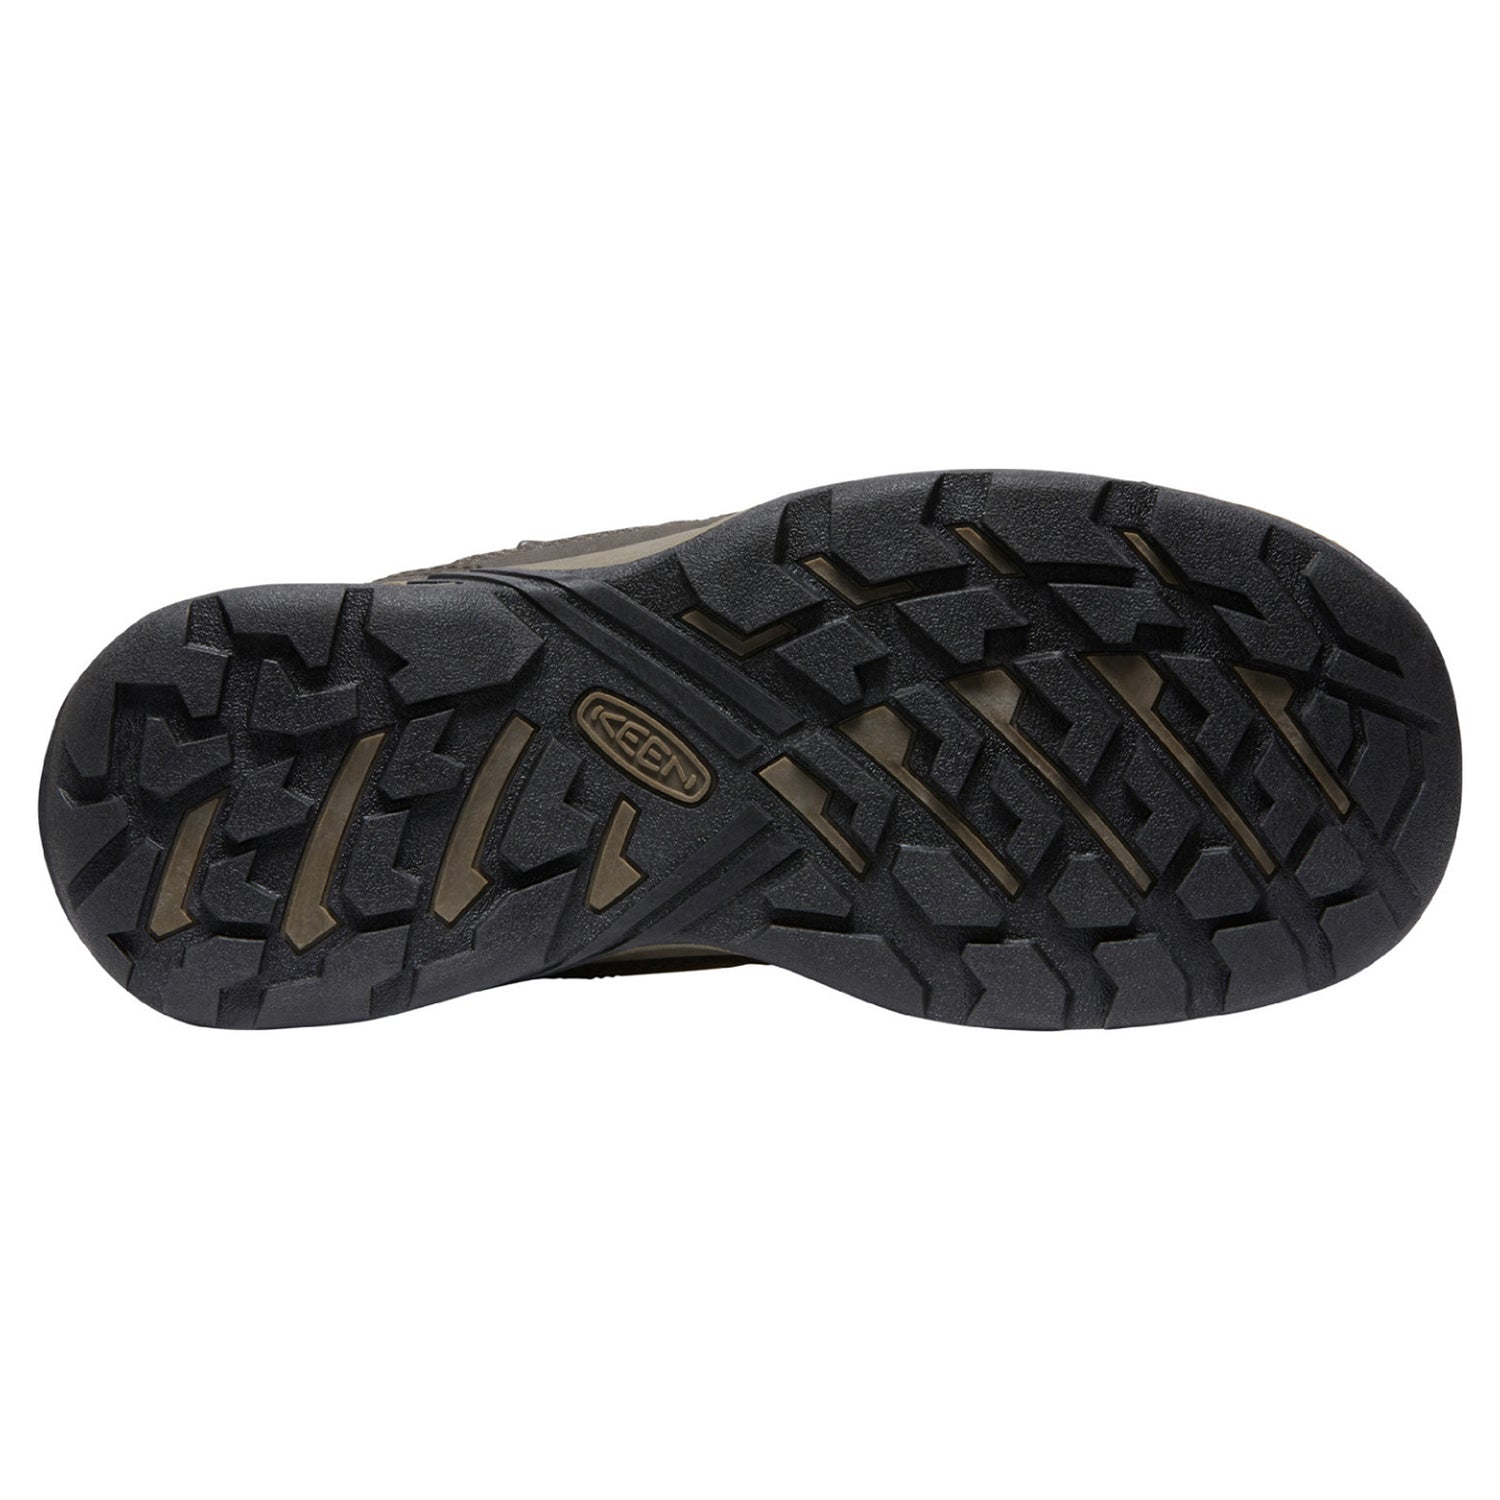 Peltz Shoes  Men's Keen Circadia Mid Waterproof Hiking Boot Bison/Brindle 1026769